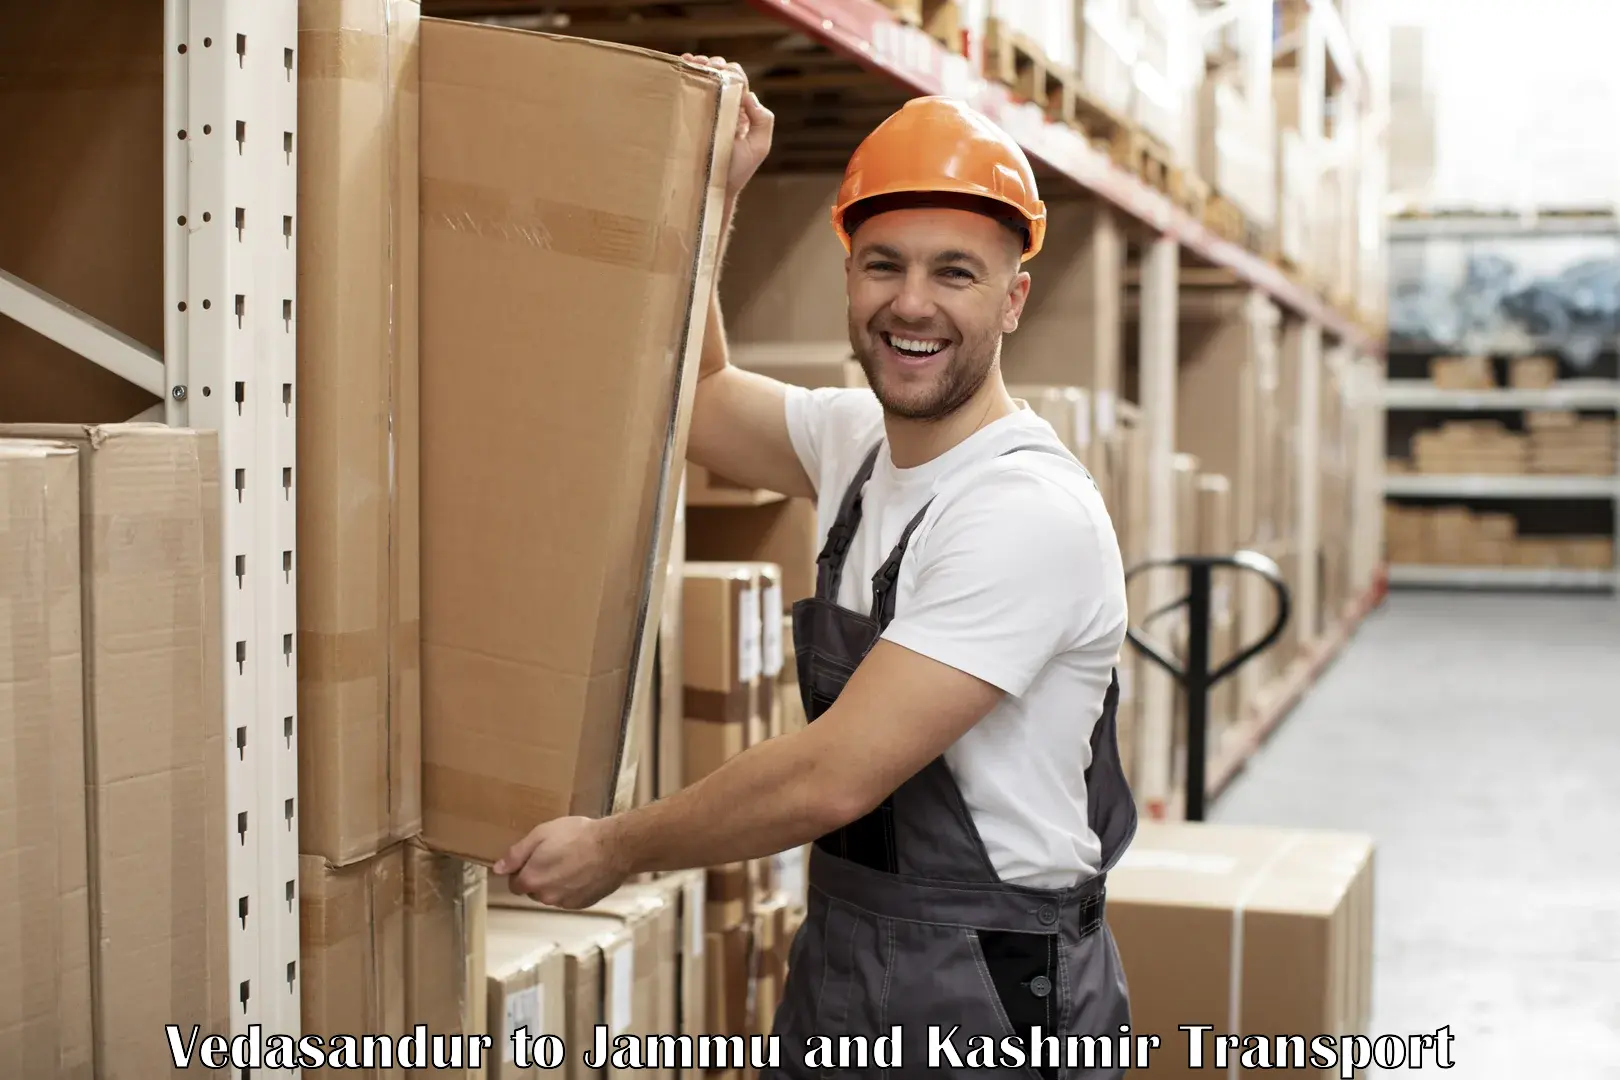 Shipping services Vedasandur to Srinagar Kashmir